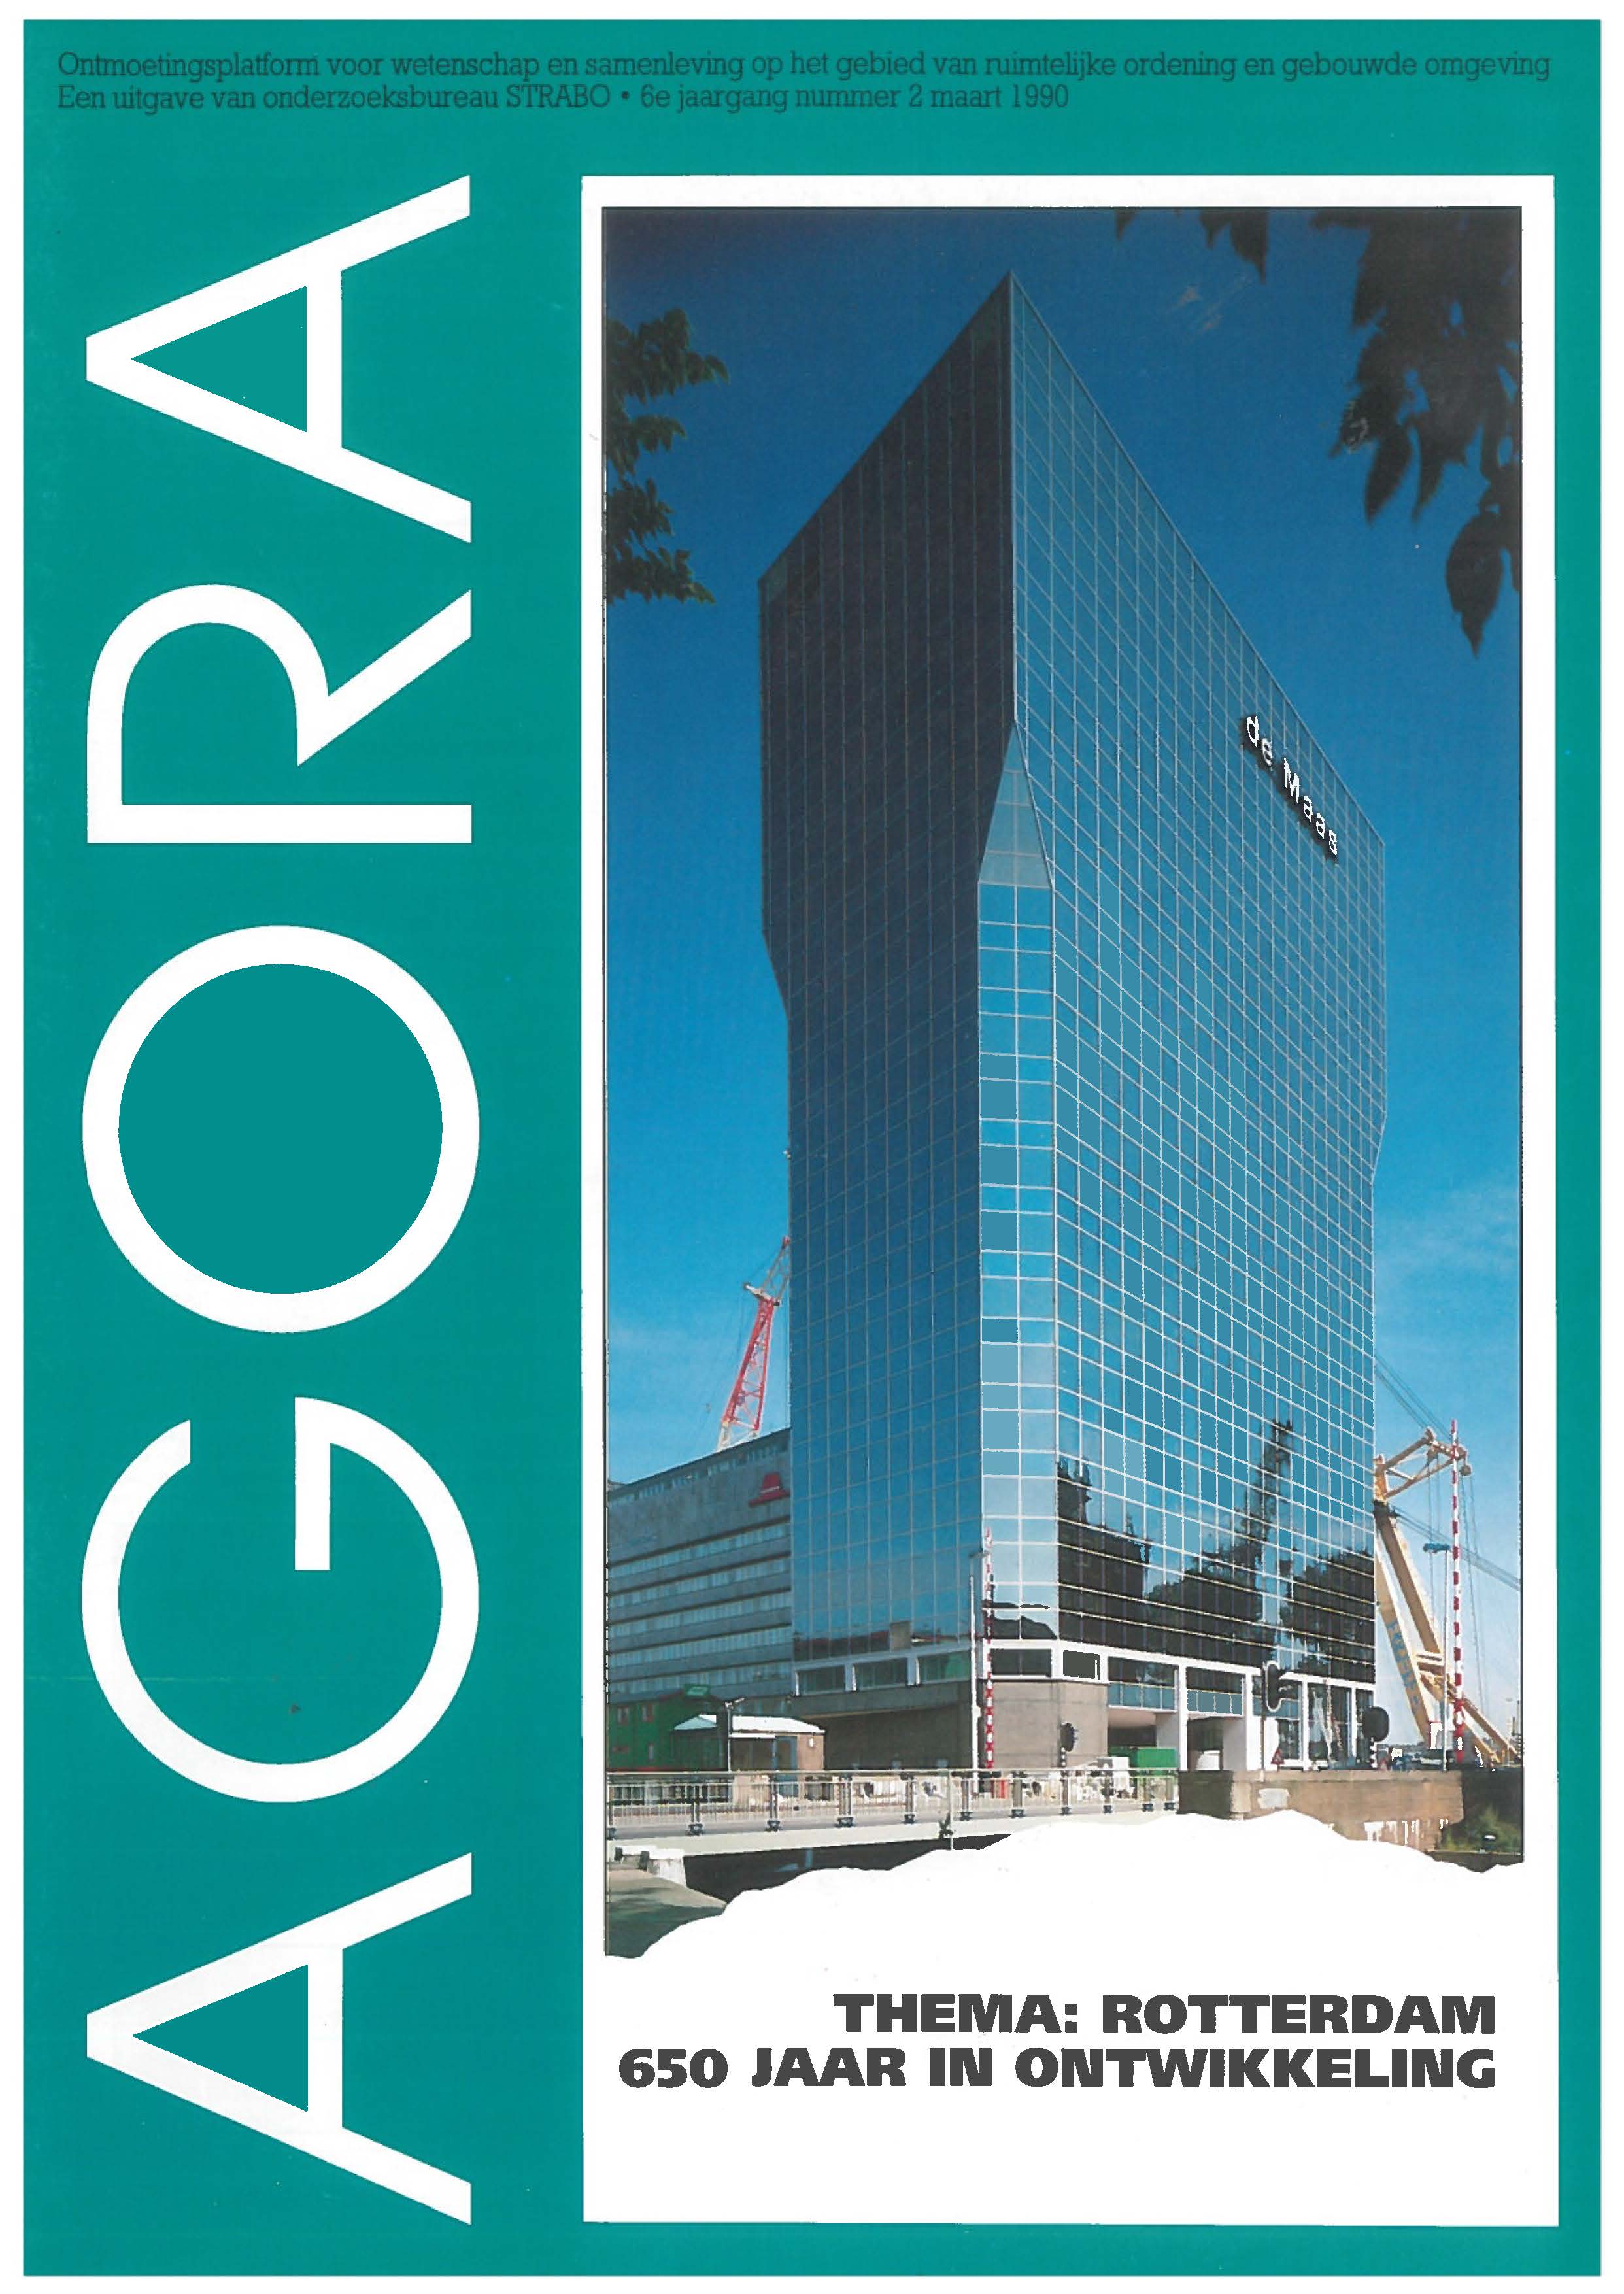 Volume 6 • Issue 2 • 1990 • Rotterdam: 650 jaar in ontwikkeling